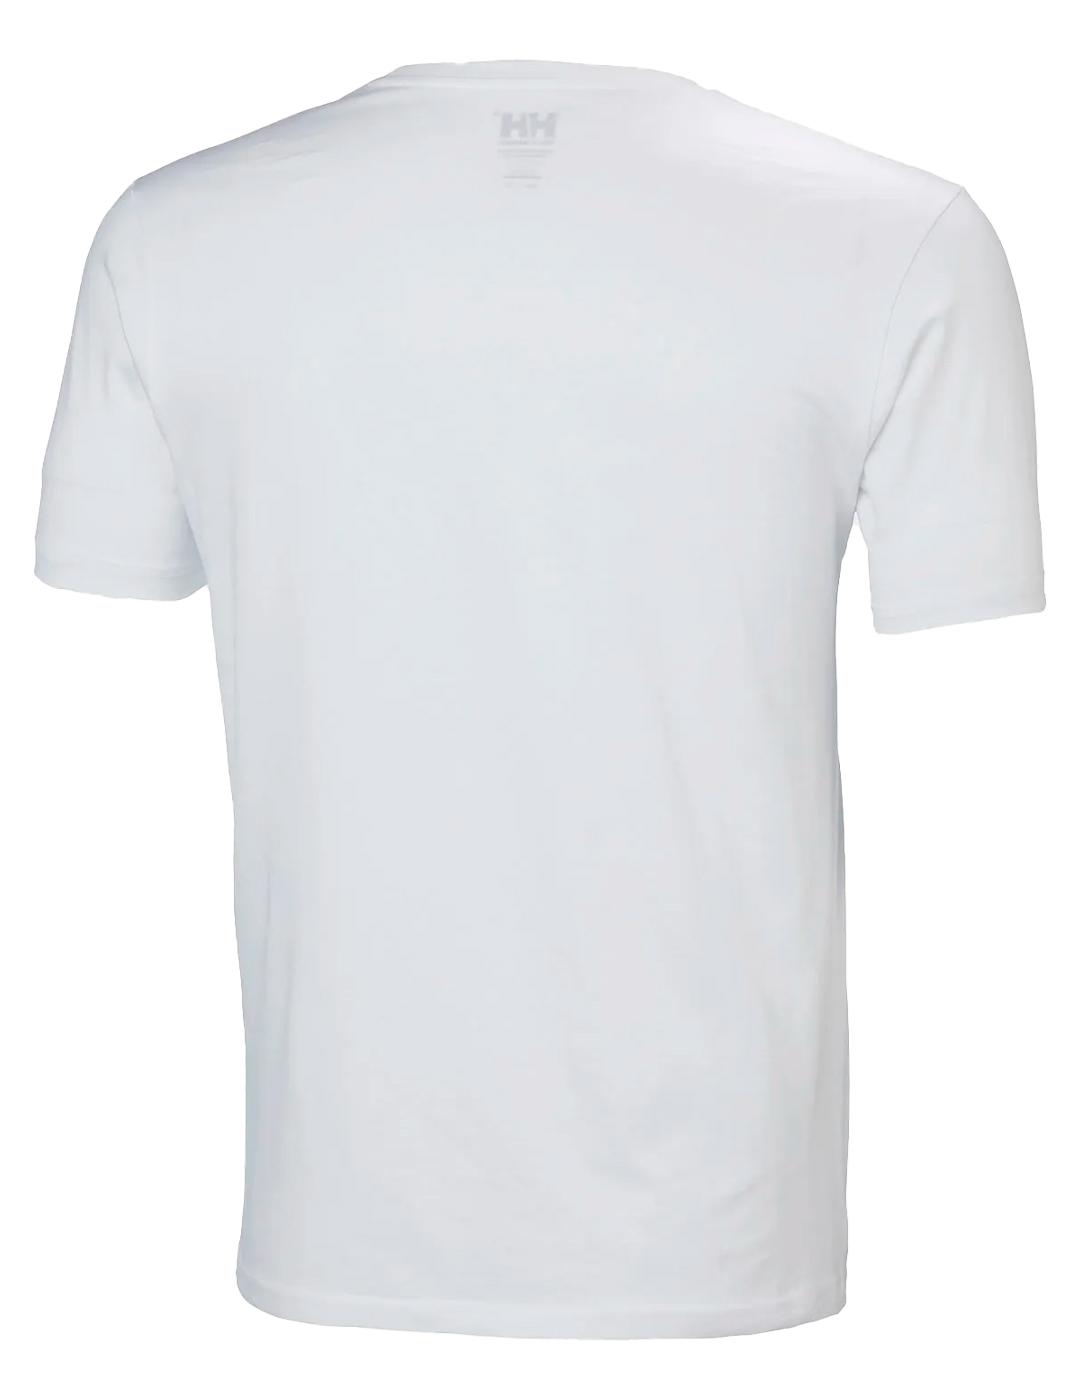 Camiseta Helly Hansen Logo Blanco